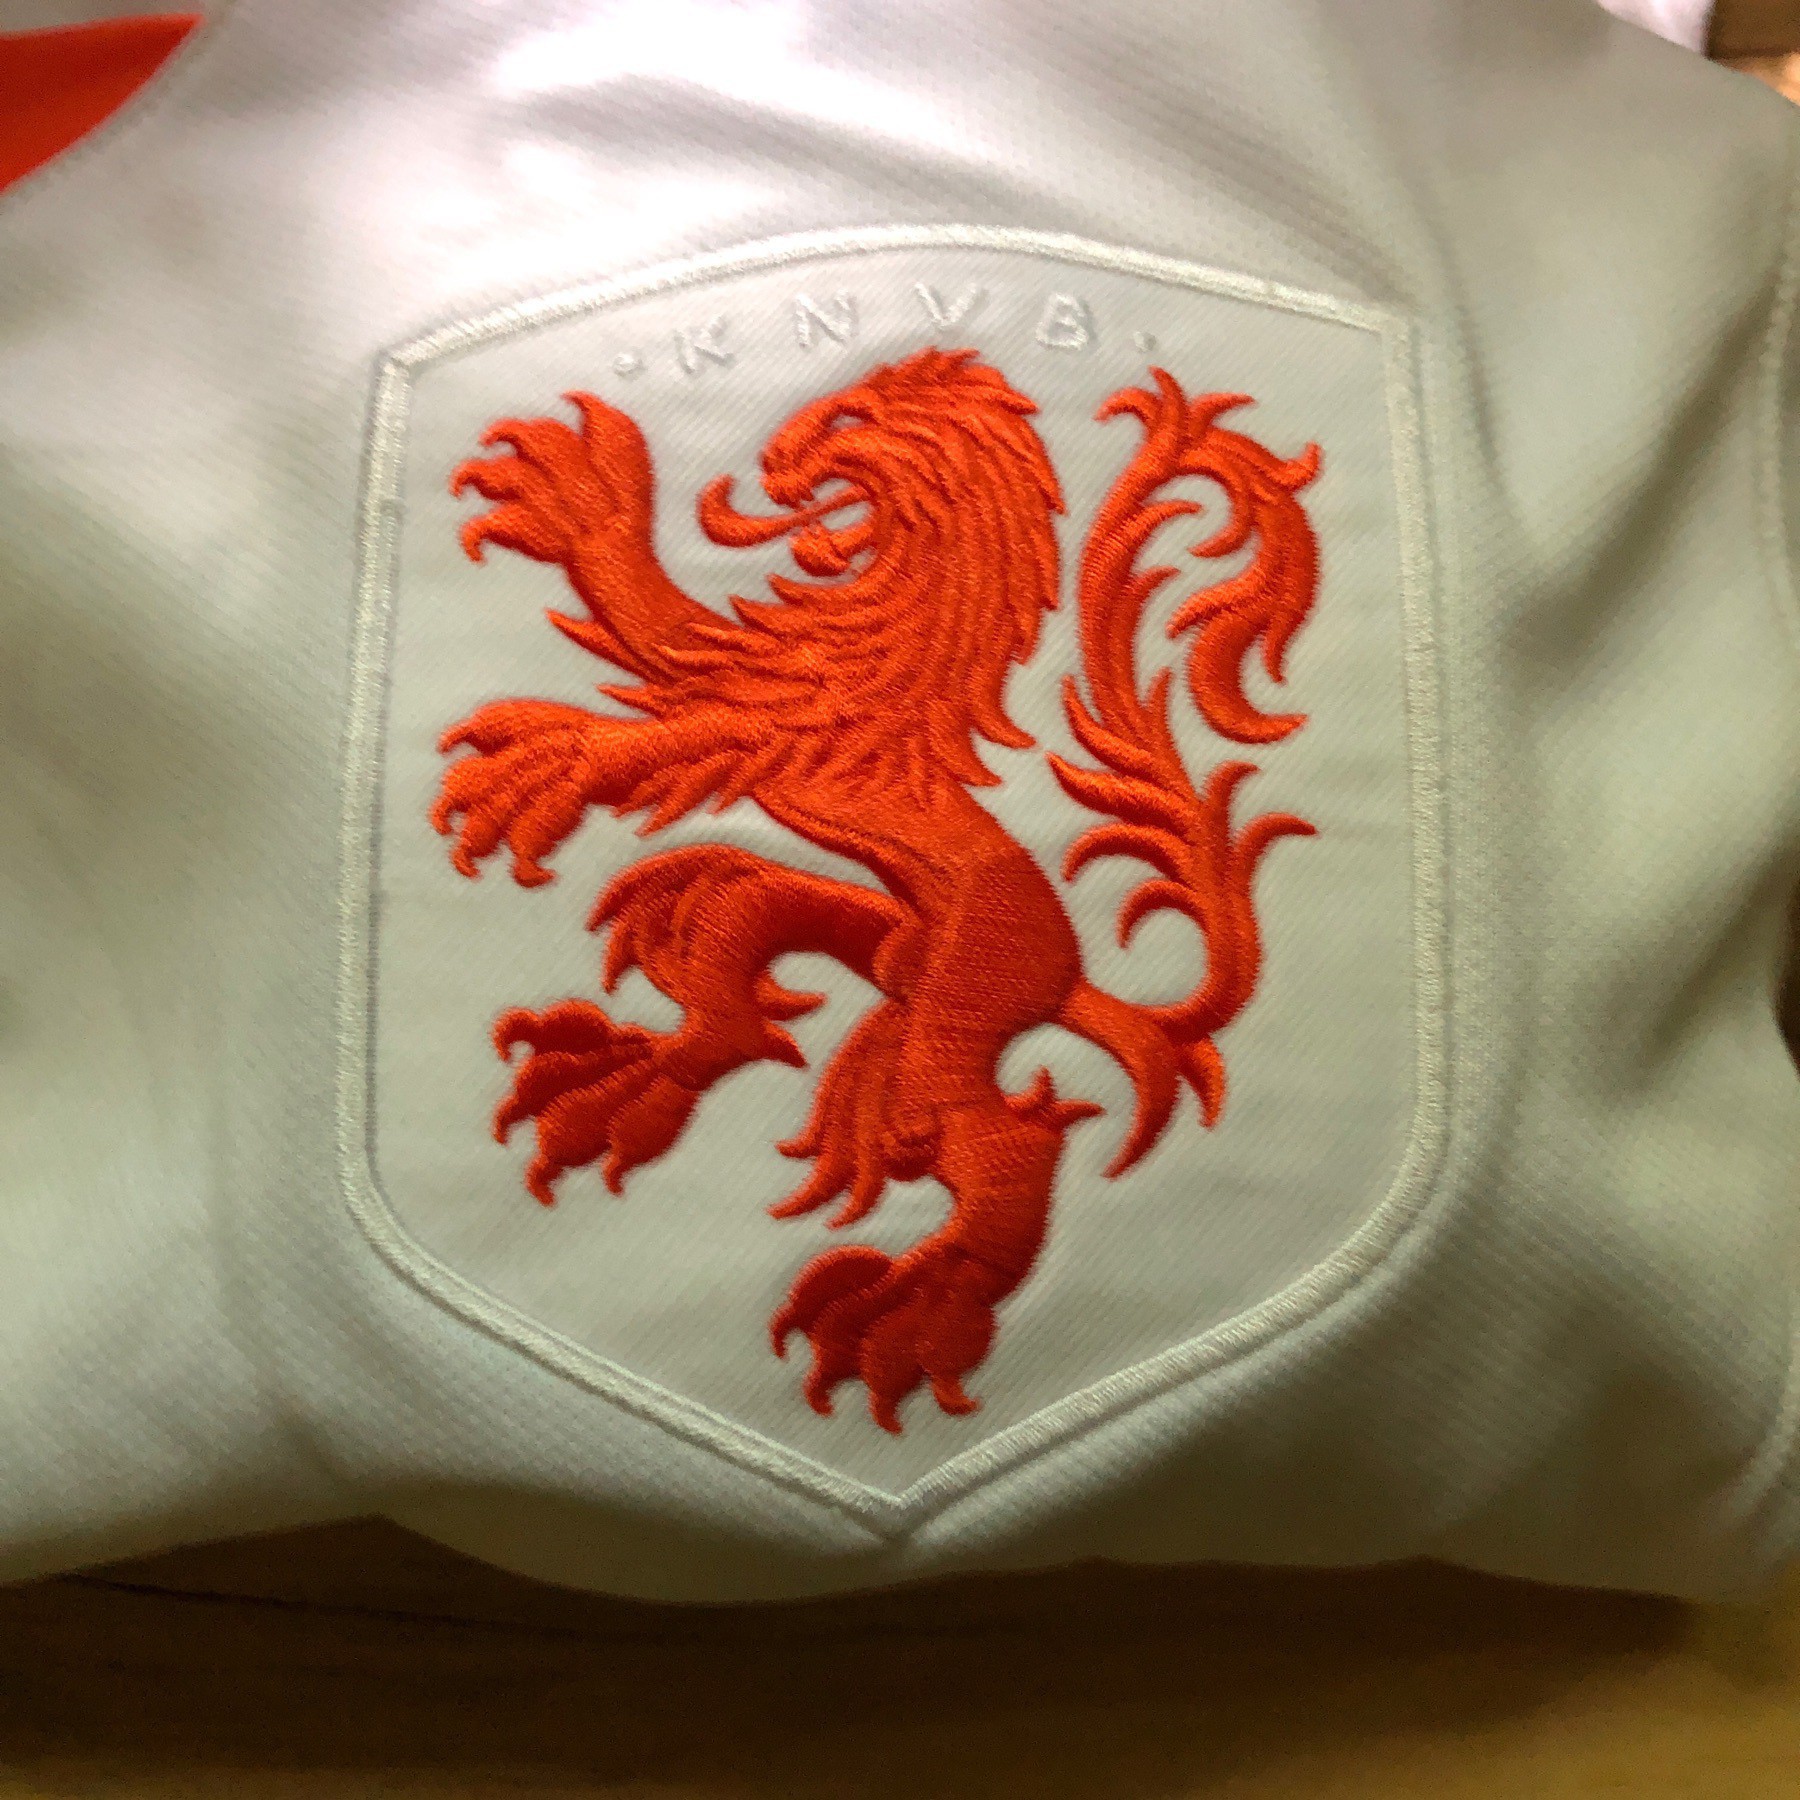 Netherlands logo on football jersey